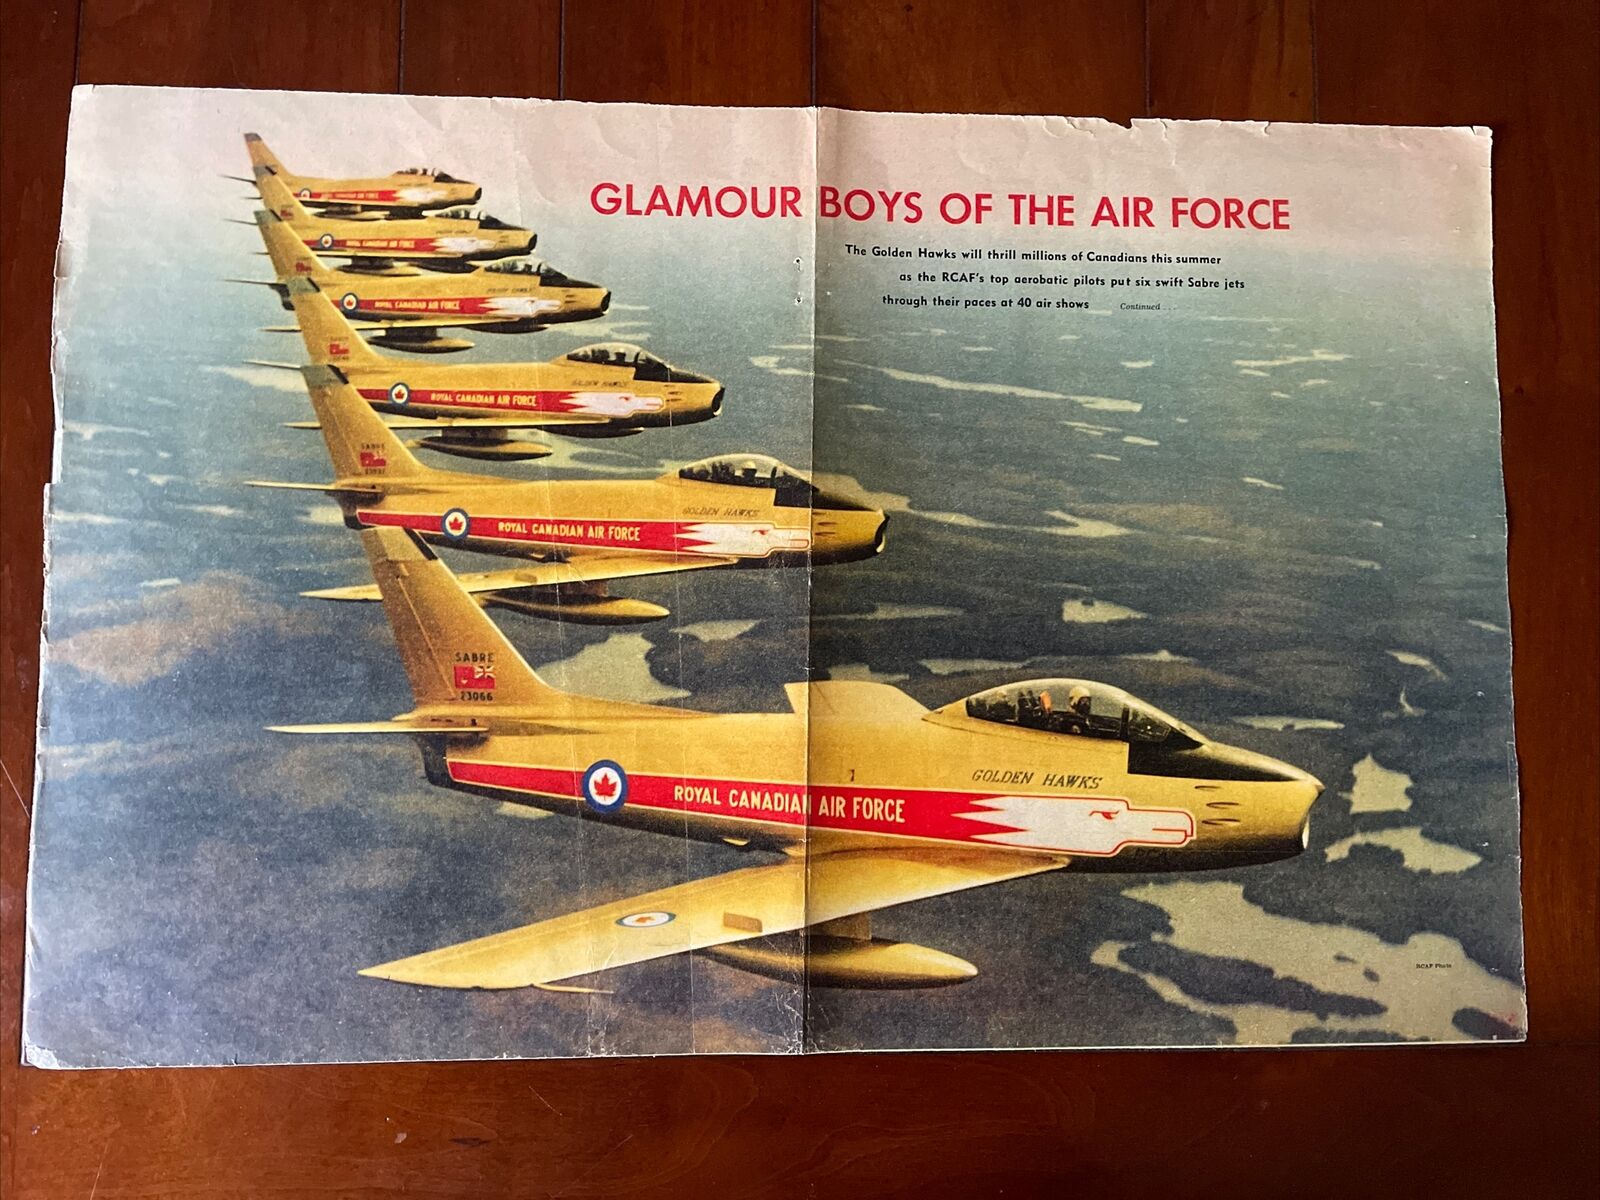 The Golden Hawks RCAF. Toronto Star Weekly 1959. Features Fern Villeneuve